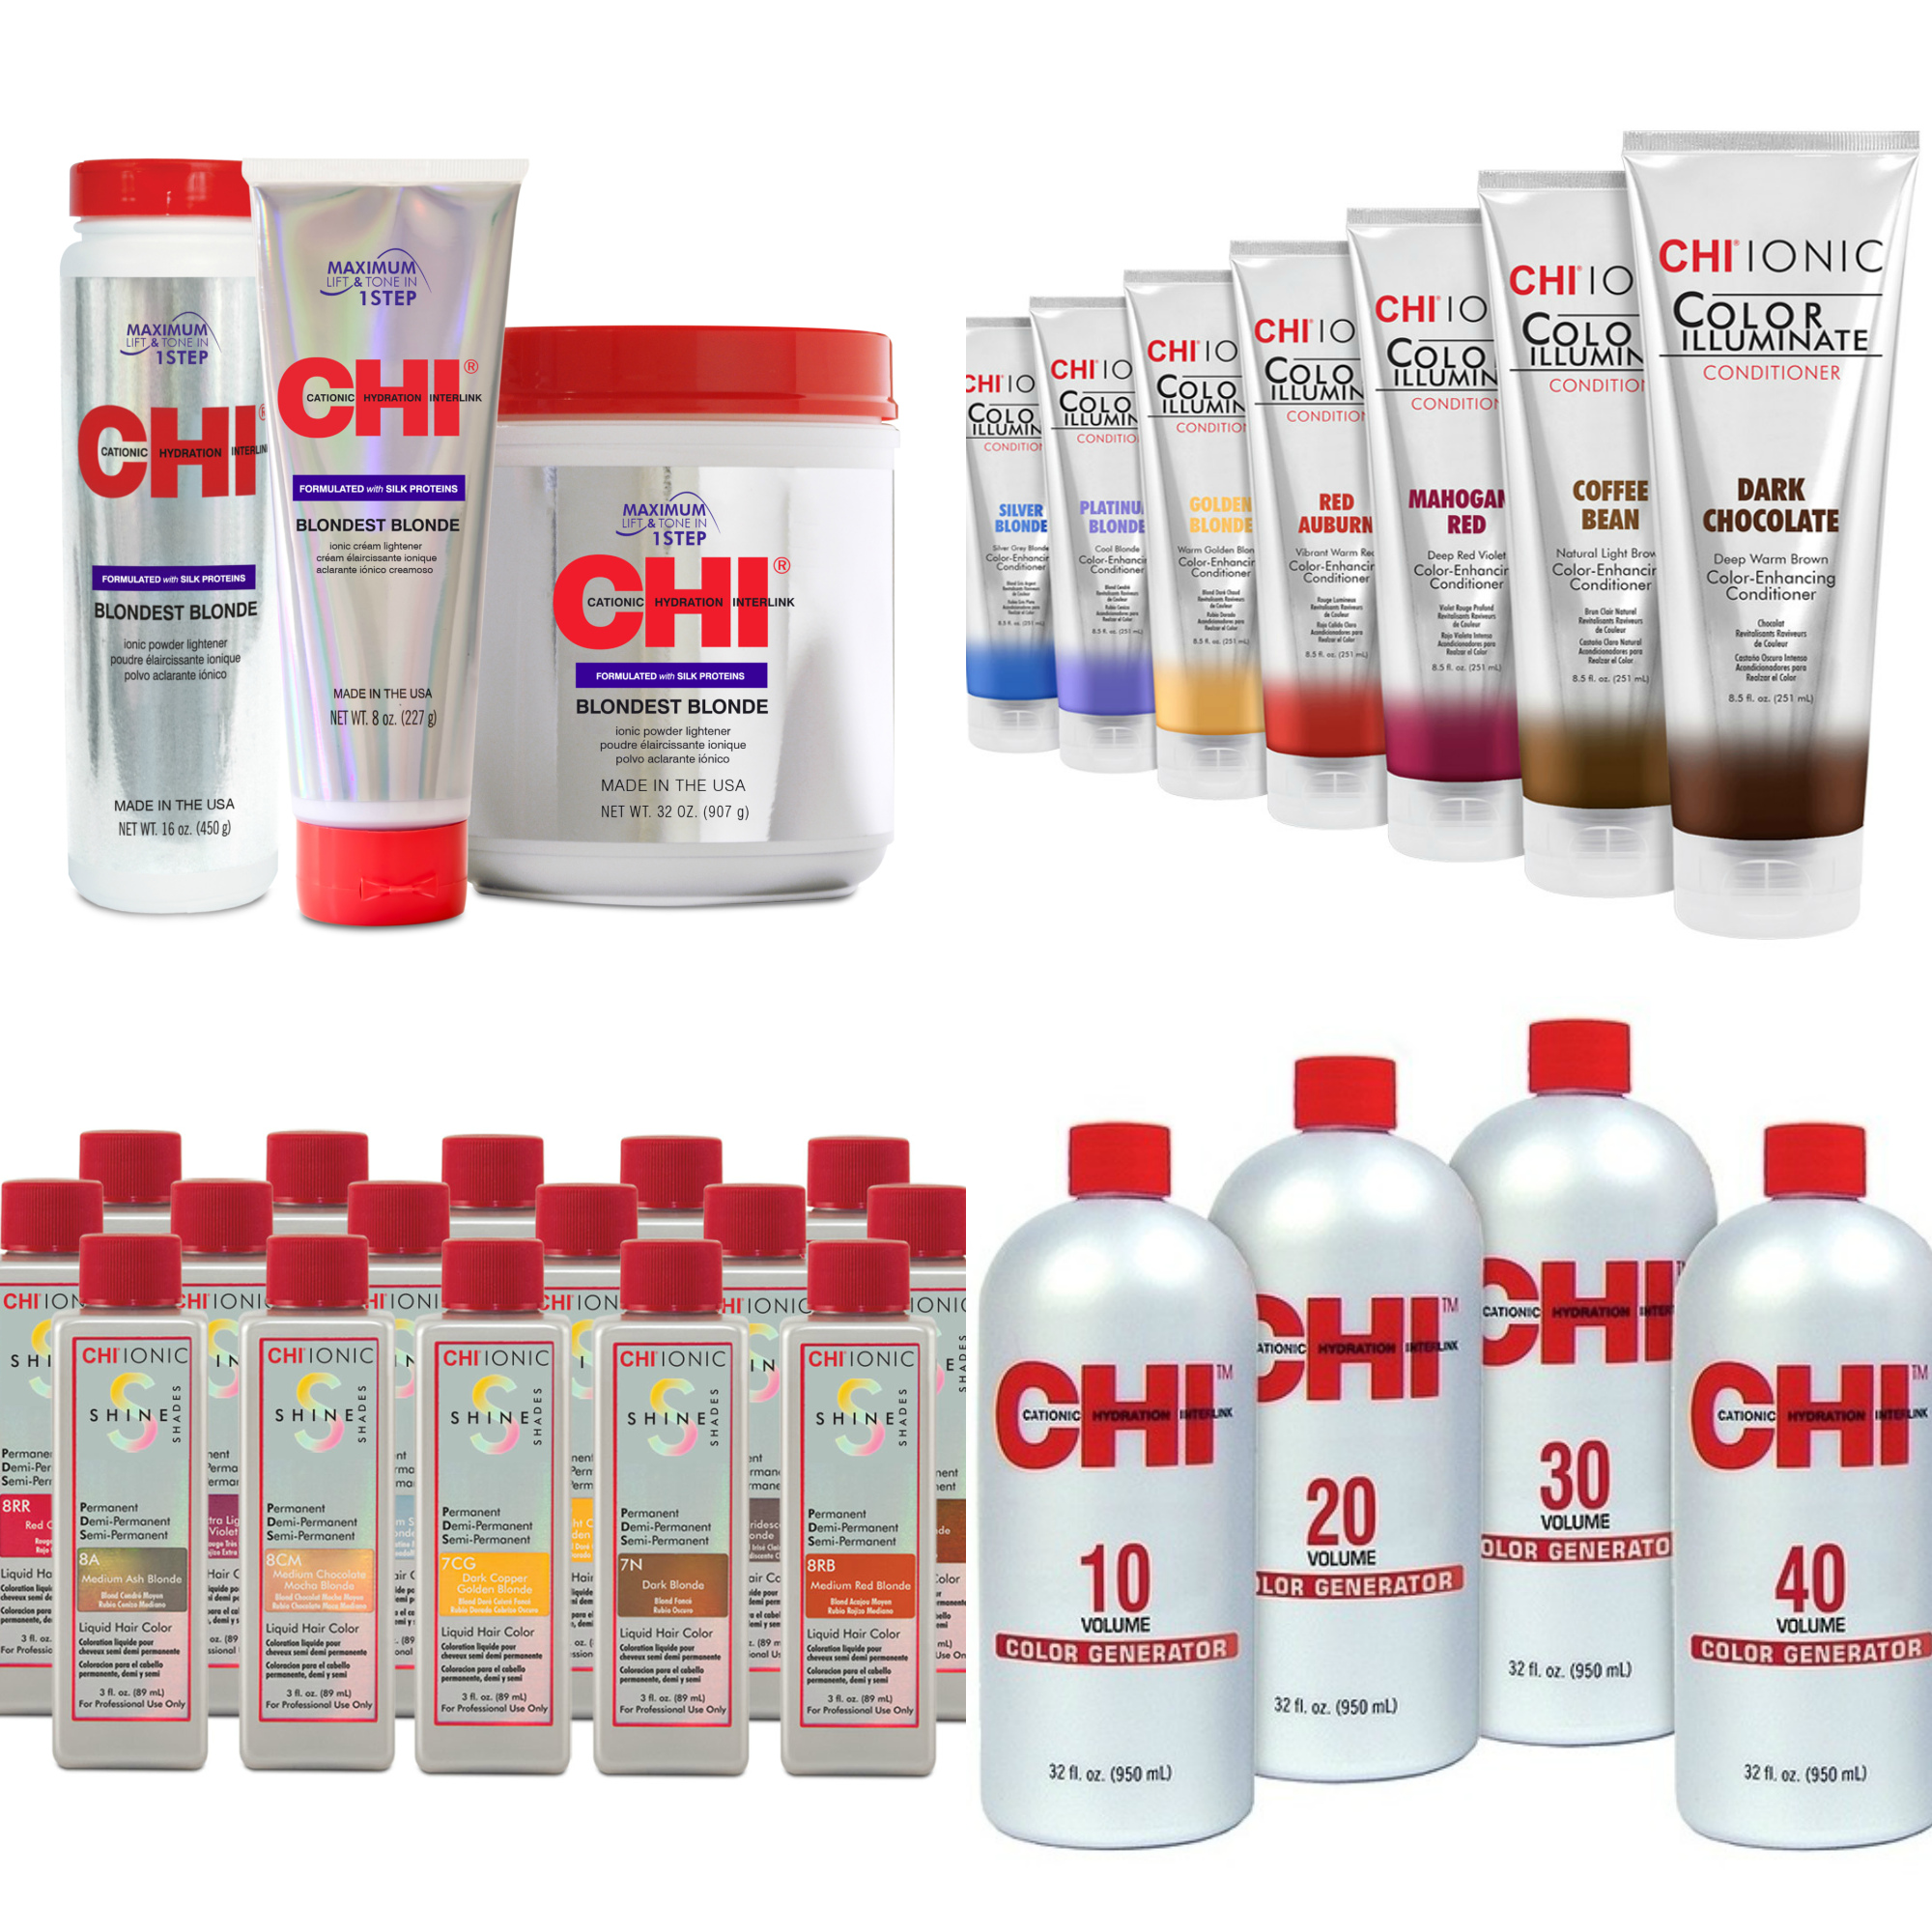 Logotip CHI Hair Coloring Cosmetical internet magazin CosmoGid